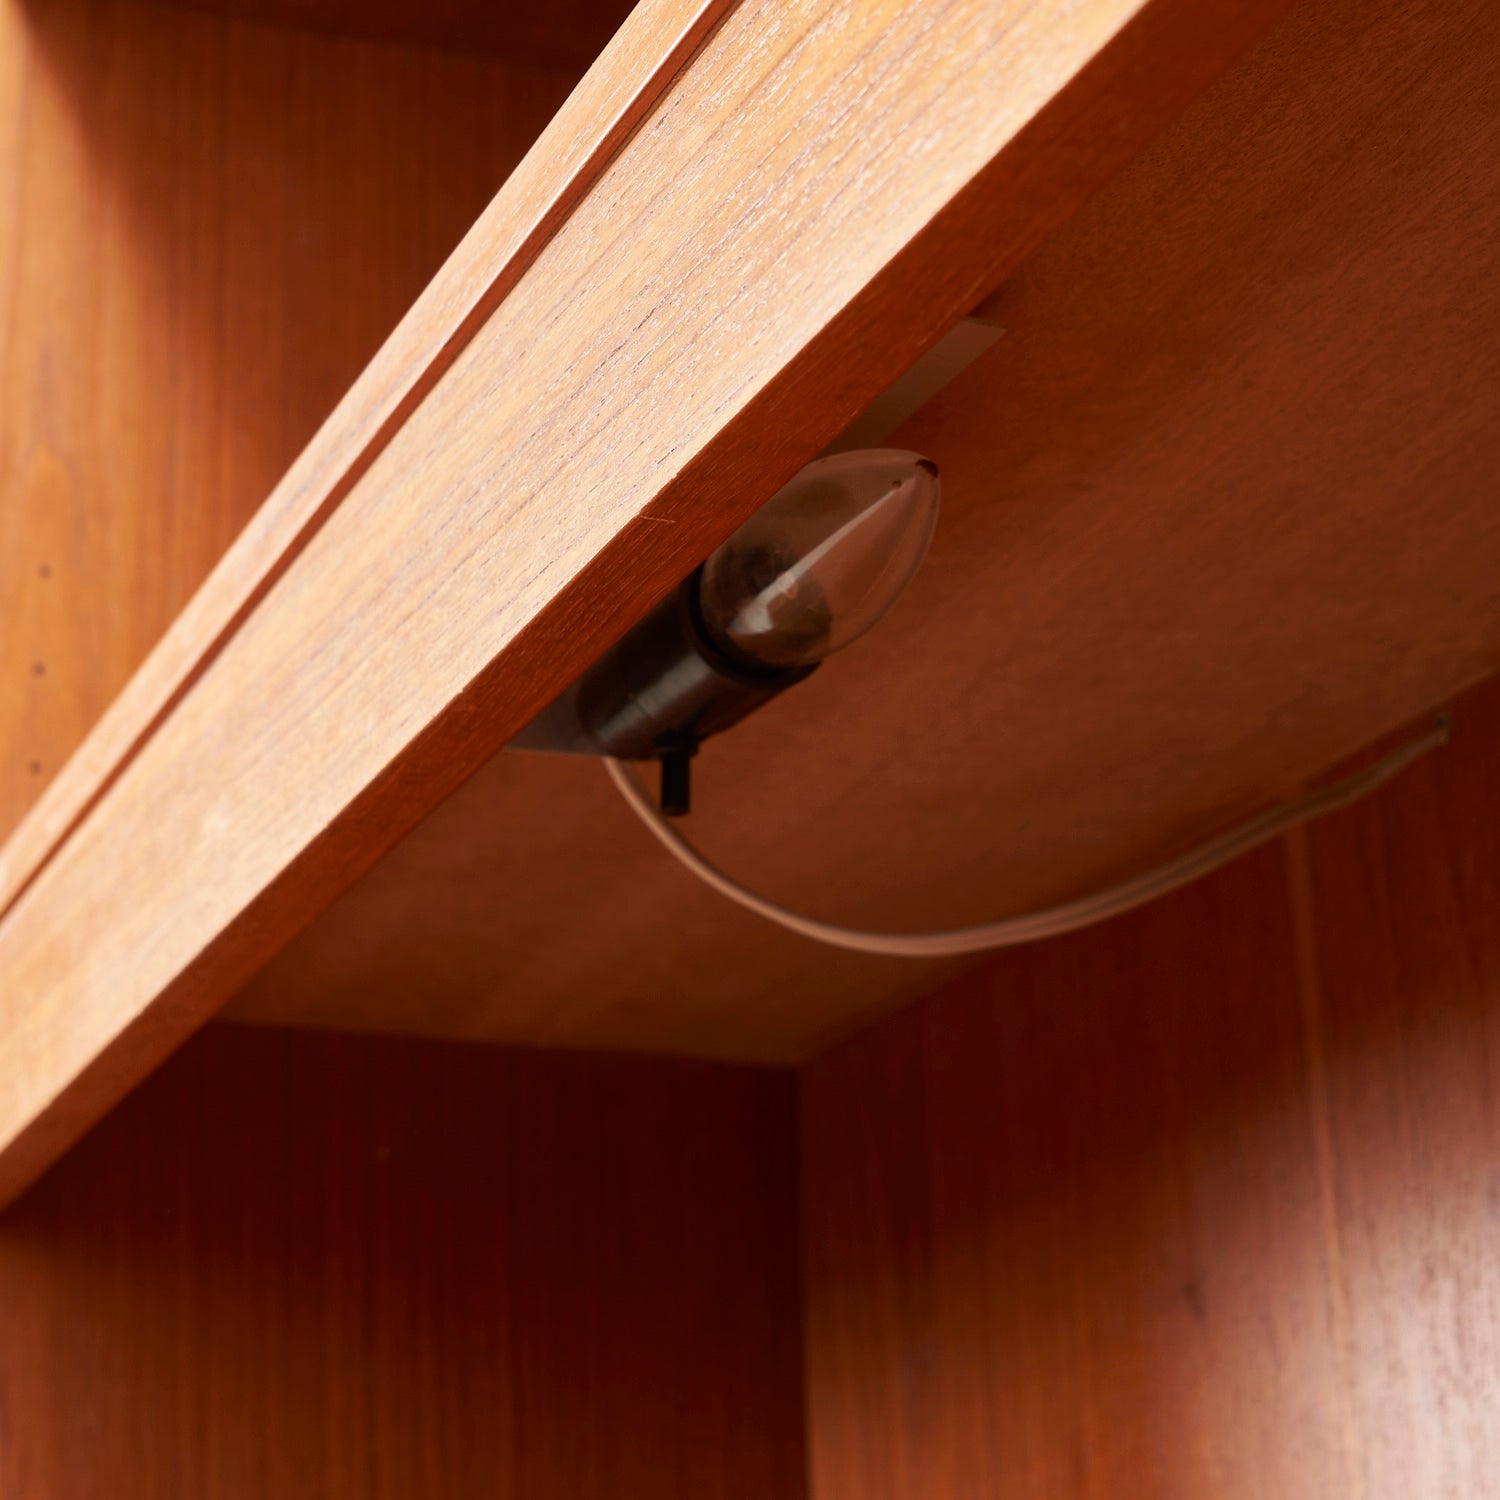 Teak Bookcase w/ Cabinet & Light by Clausen & Søn